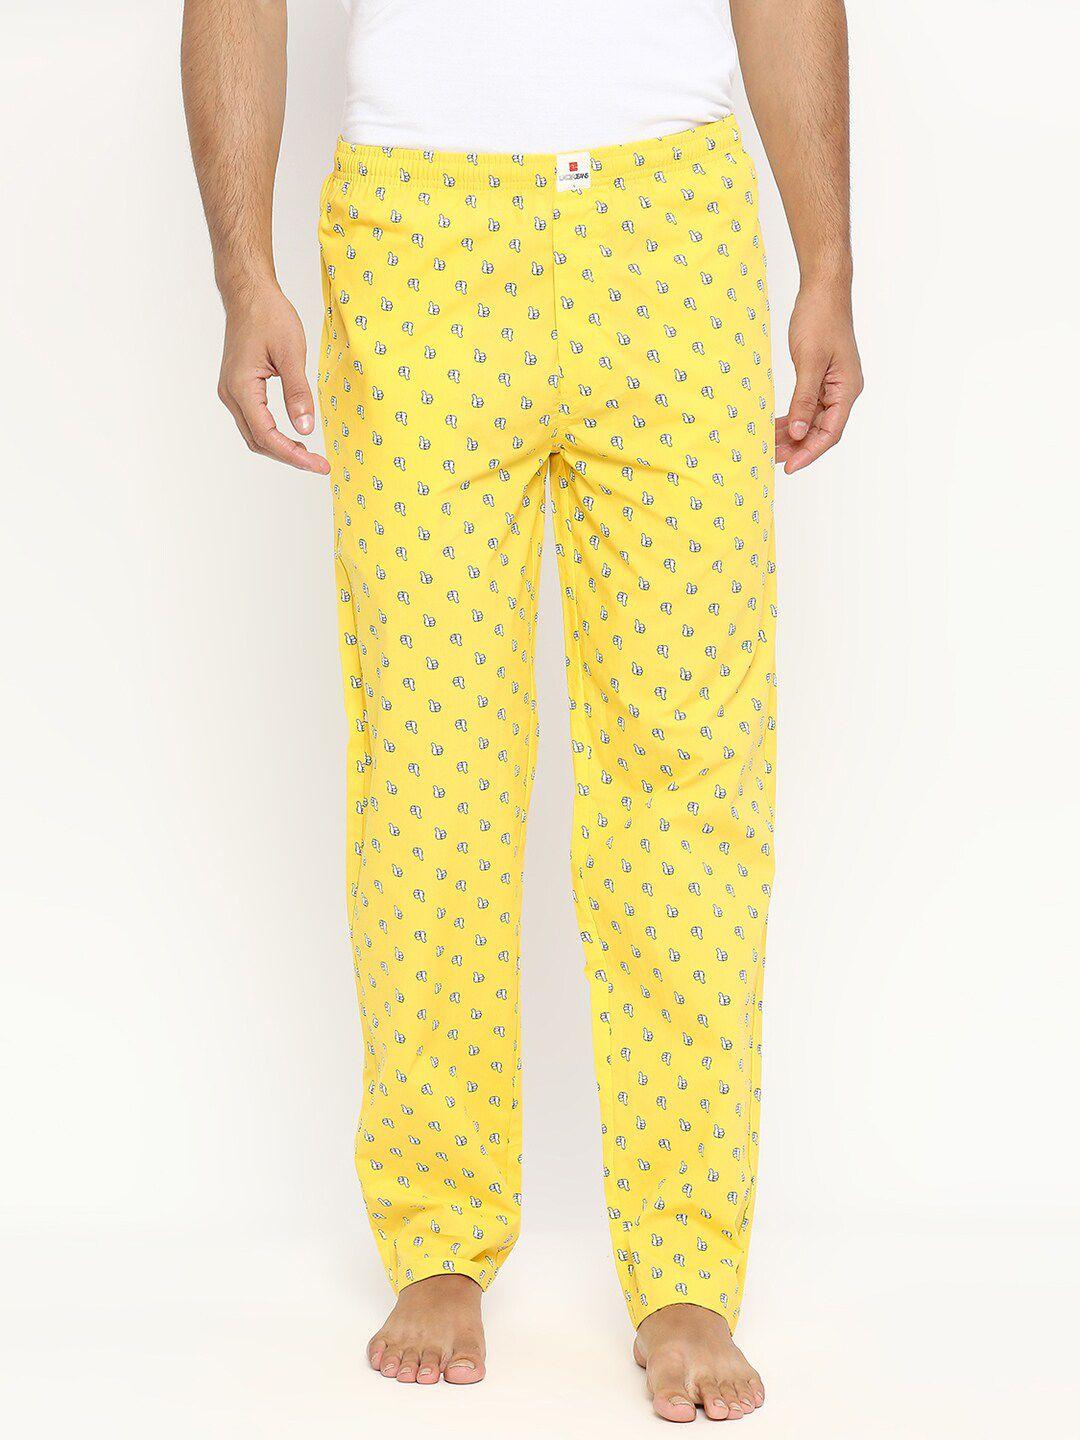 underjeans-by-spykar-men-yellow-printed-cotton-lounge-pants